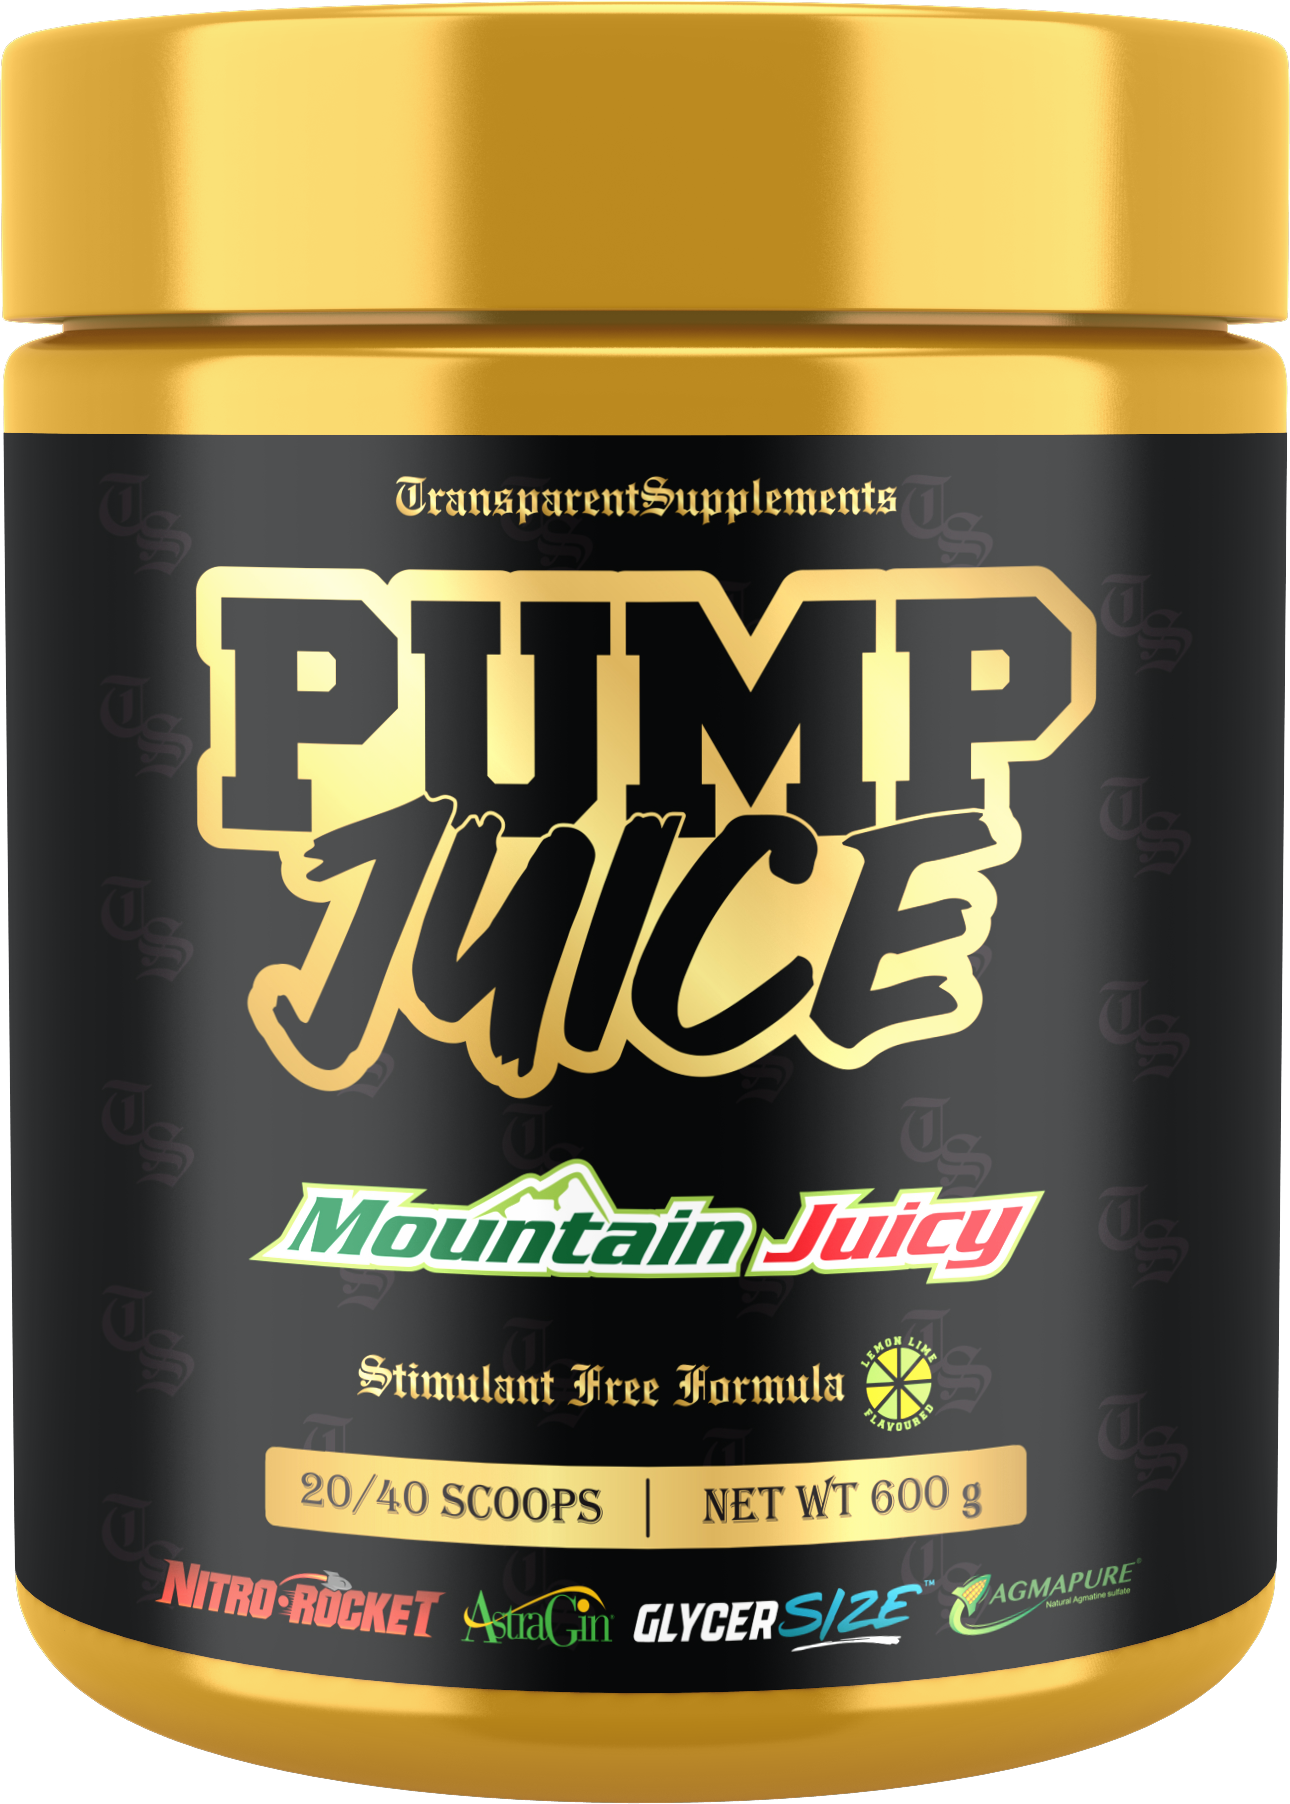 Sample Pump Juice